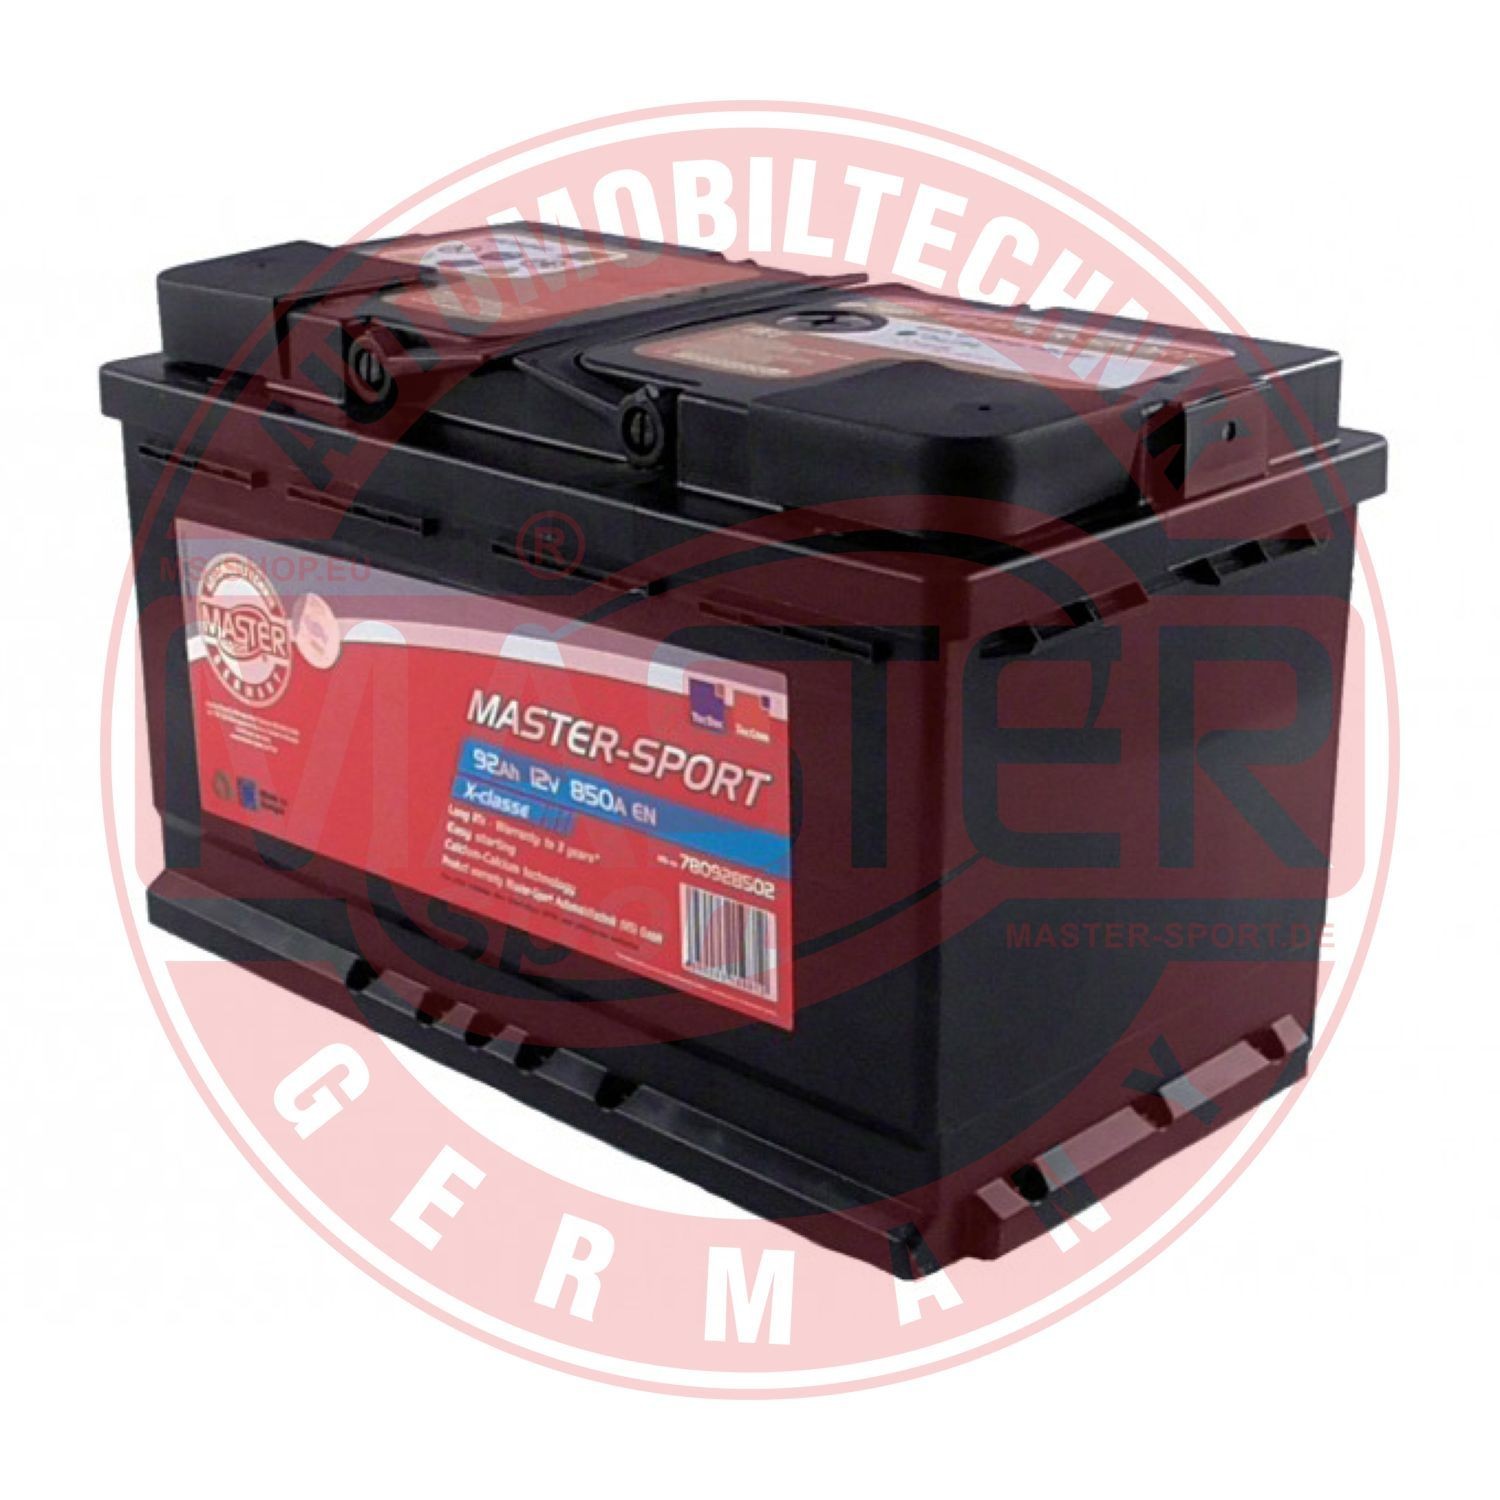 MASTER-SPORT Autobatterie Audi 780928502 in Original Qualität